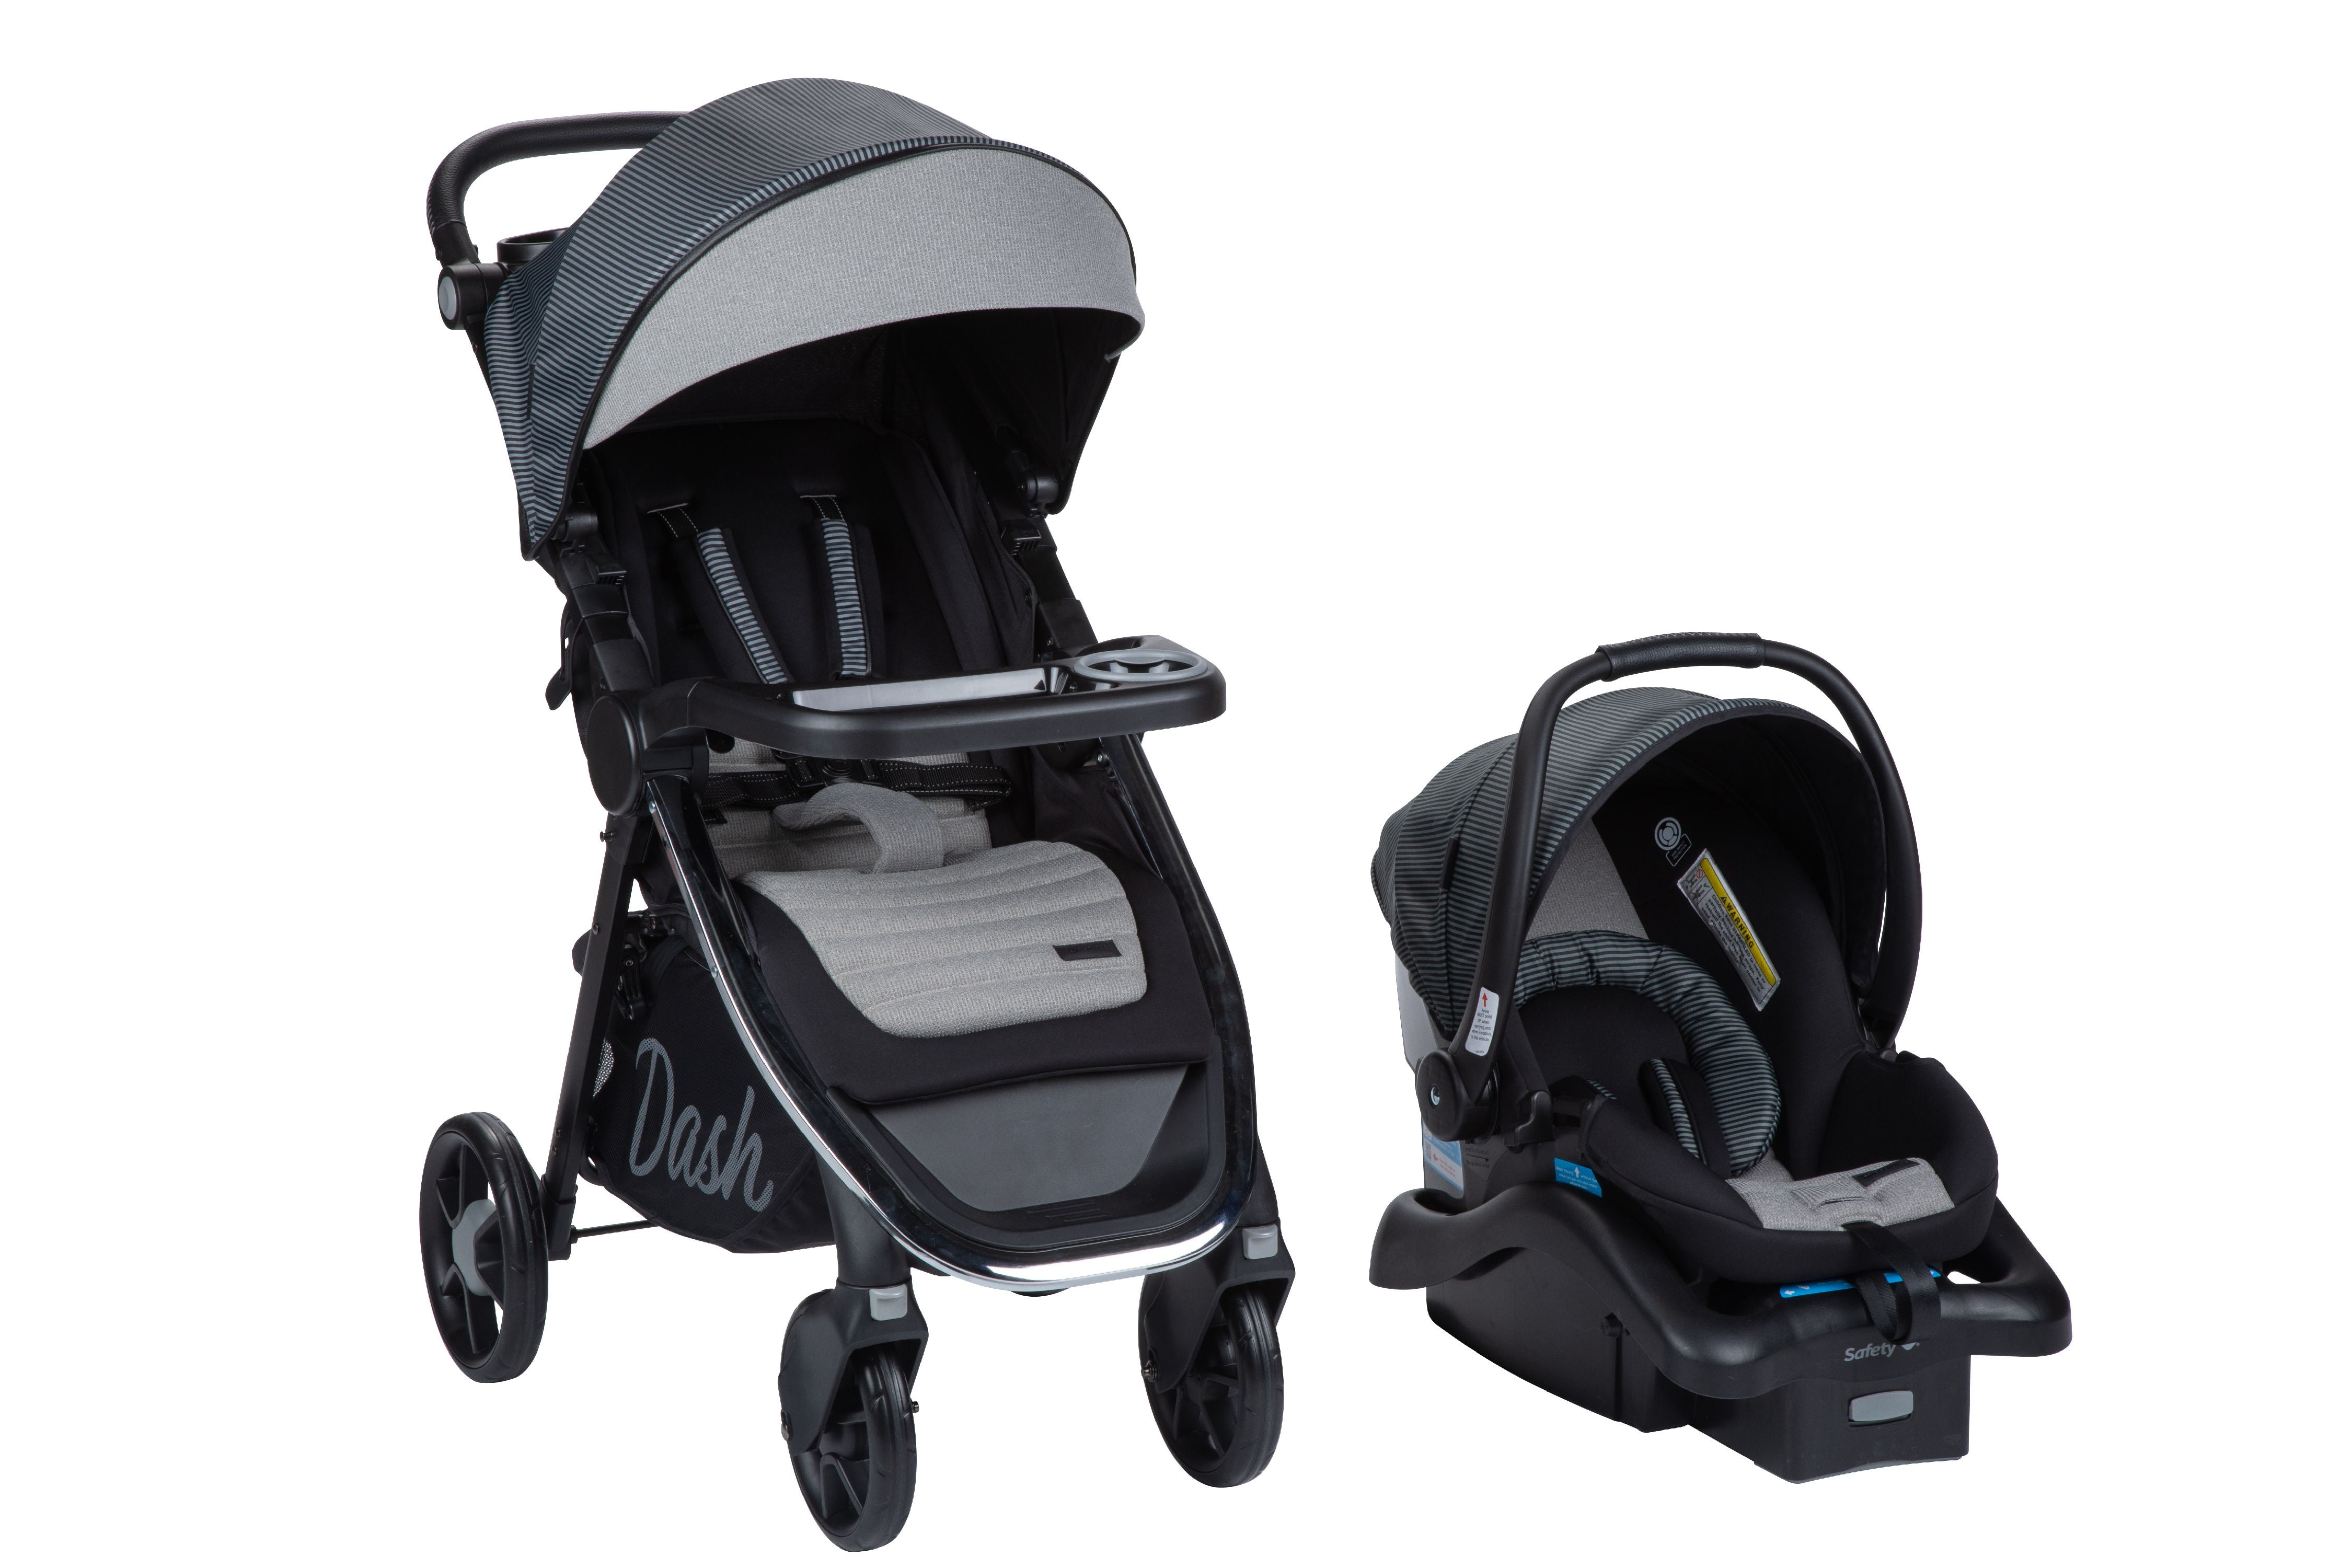 Monbebe Dash Travel System Stroller and Infant Car Seat, Pinstripe 